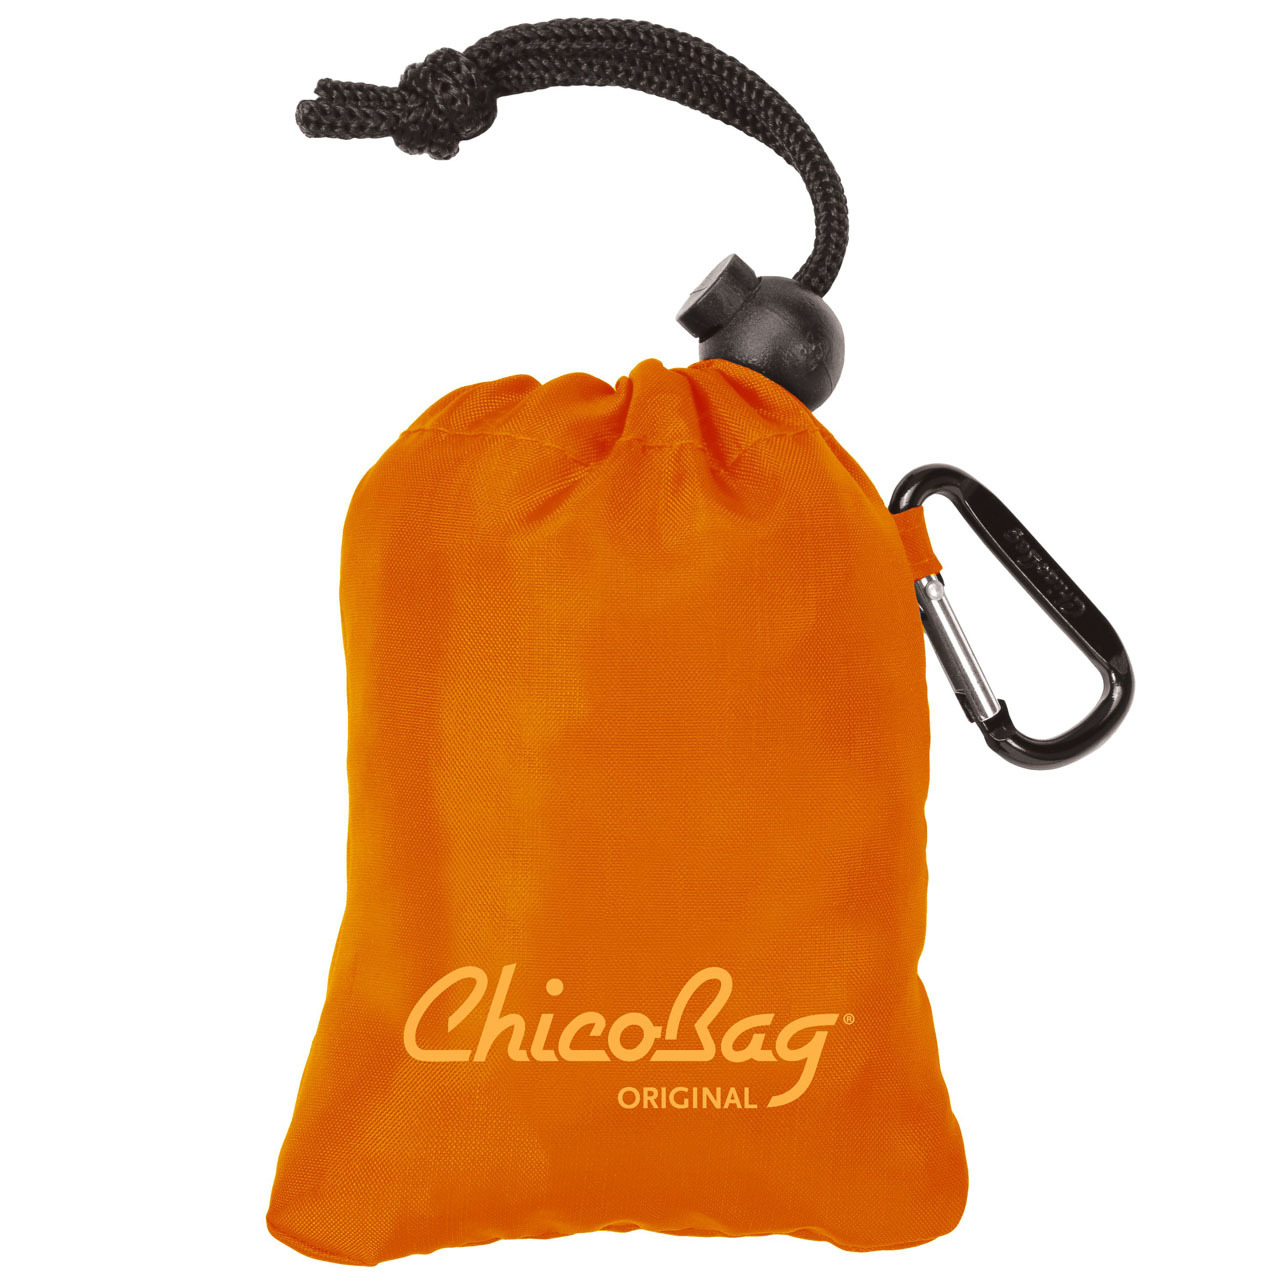 ChicoBag Original [チコバッグ] [19430020]_f0051306_11213042.jpg